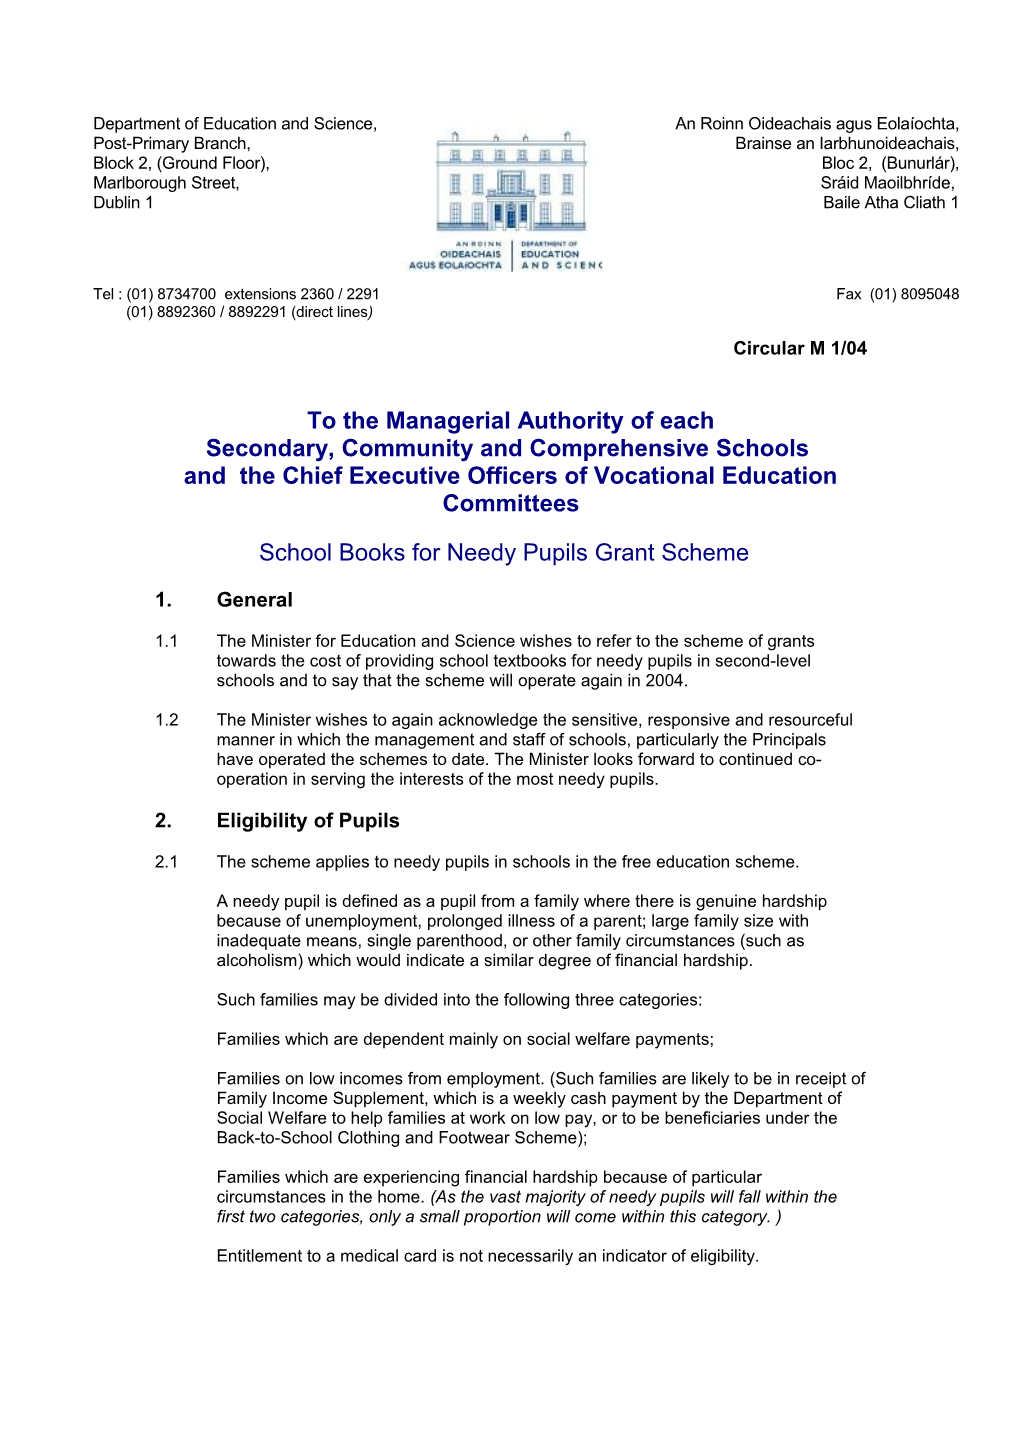 Post Primary Circular M01/04 - School Books for Needy Pupils Grant Scheme (File Format